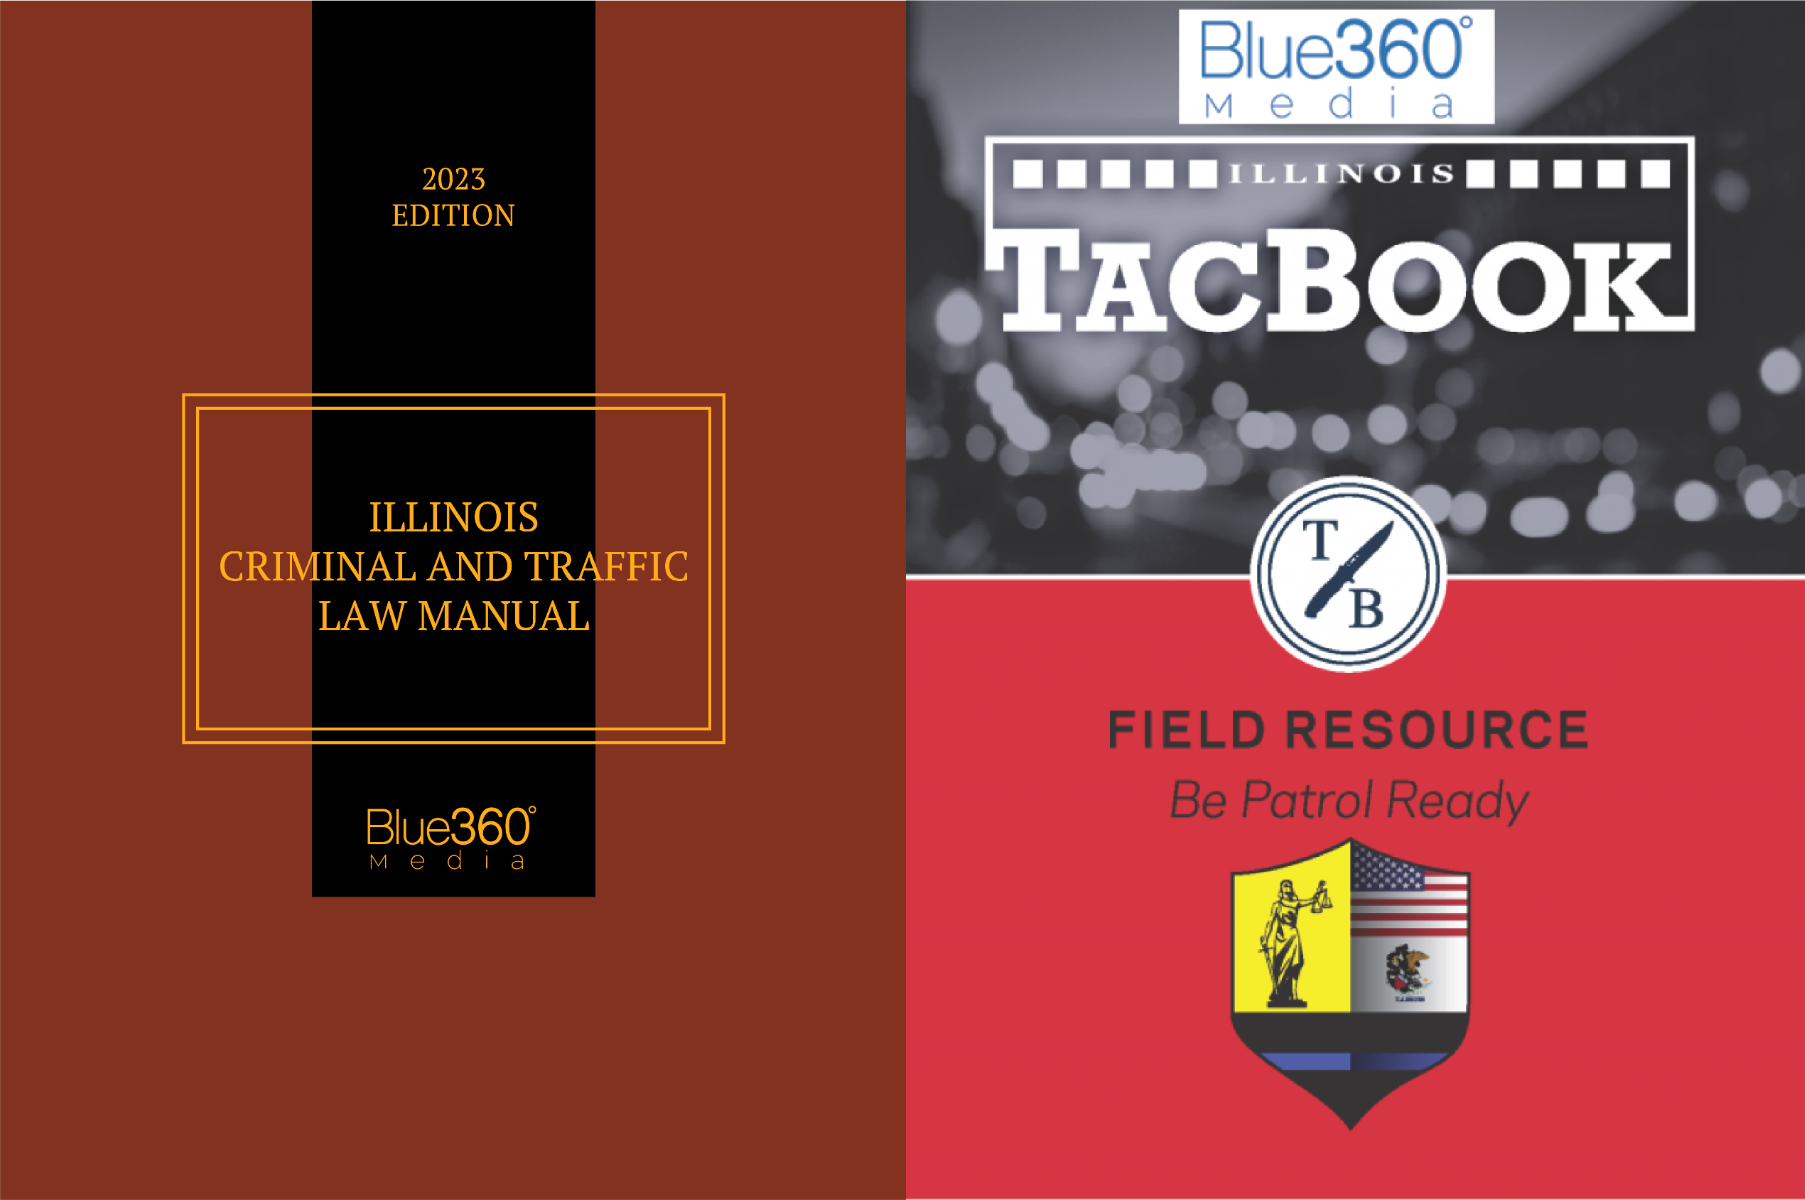 Illinois Criminal & Traffic Law Manual w/TacBook Field Resource